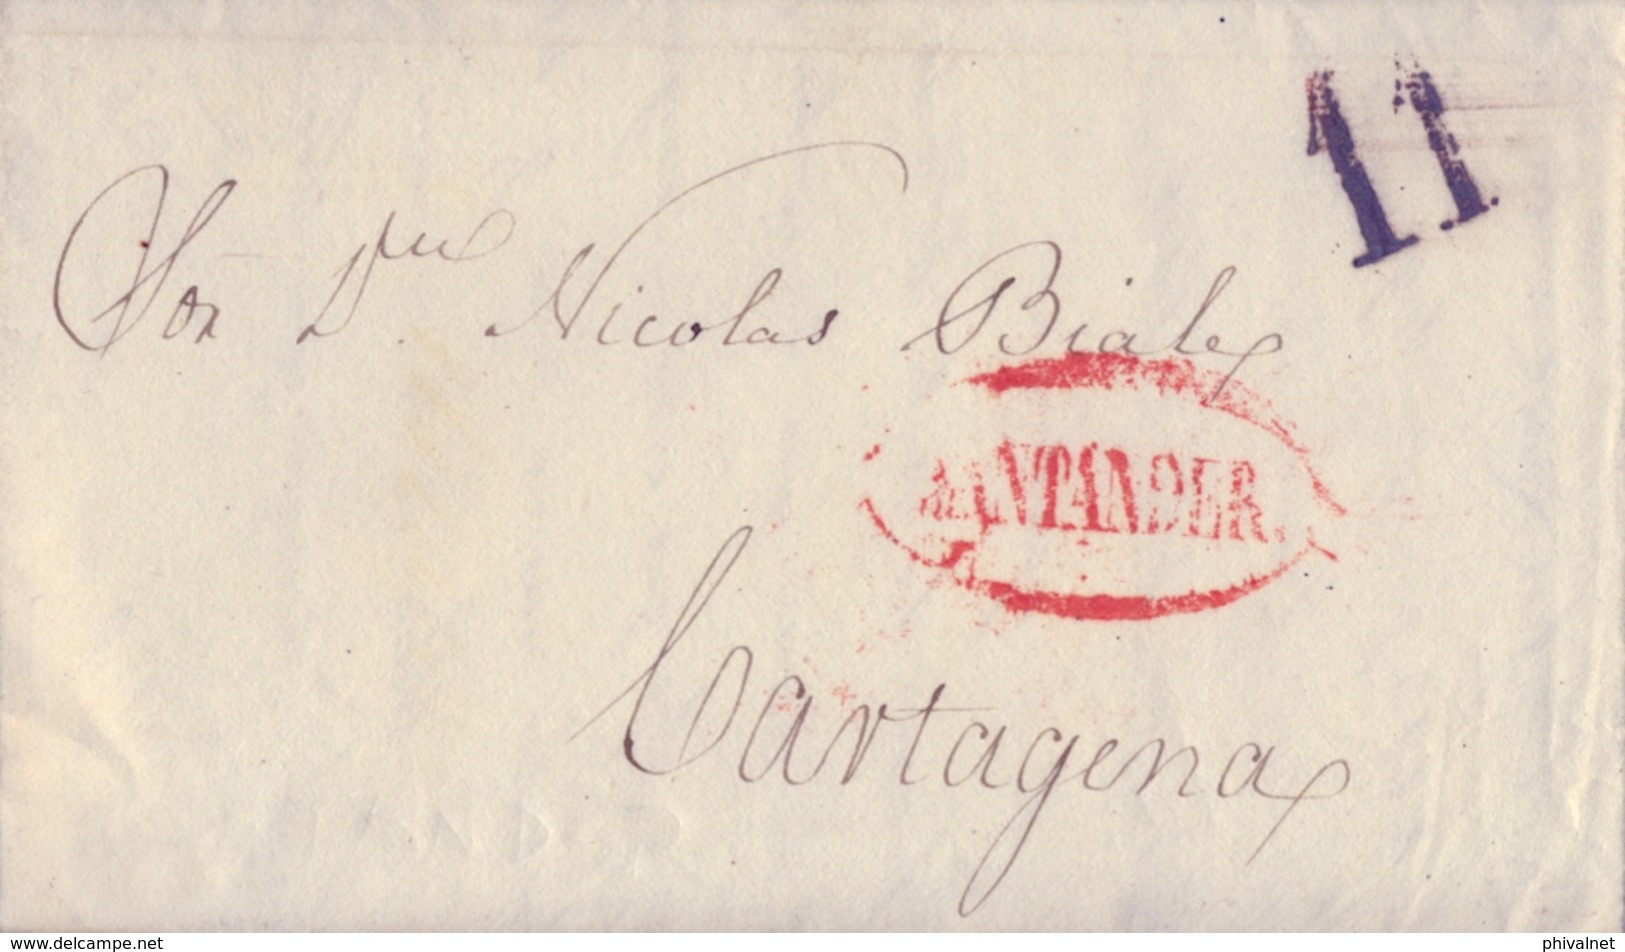 PREFILATELIA , 1841  , CARTA COMPLETA  , CANTABRIA  , SANTANDER - CARTAGENA  , T. 13 - ...-1850 Prefilatelia